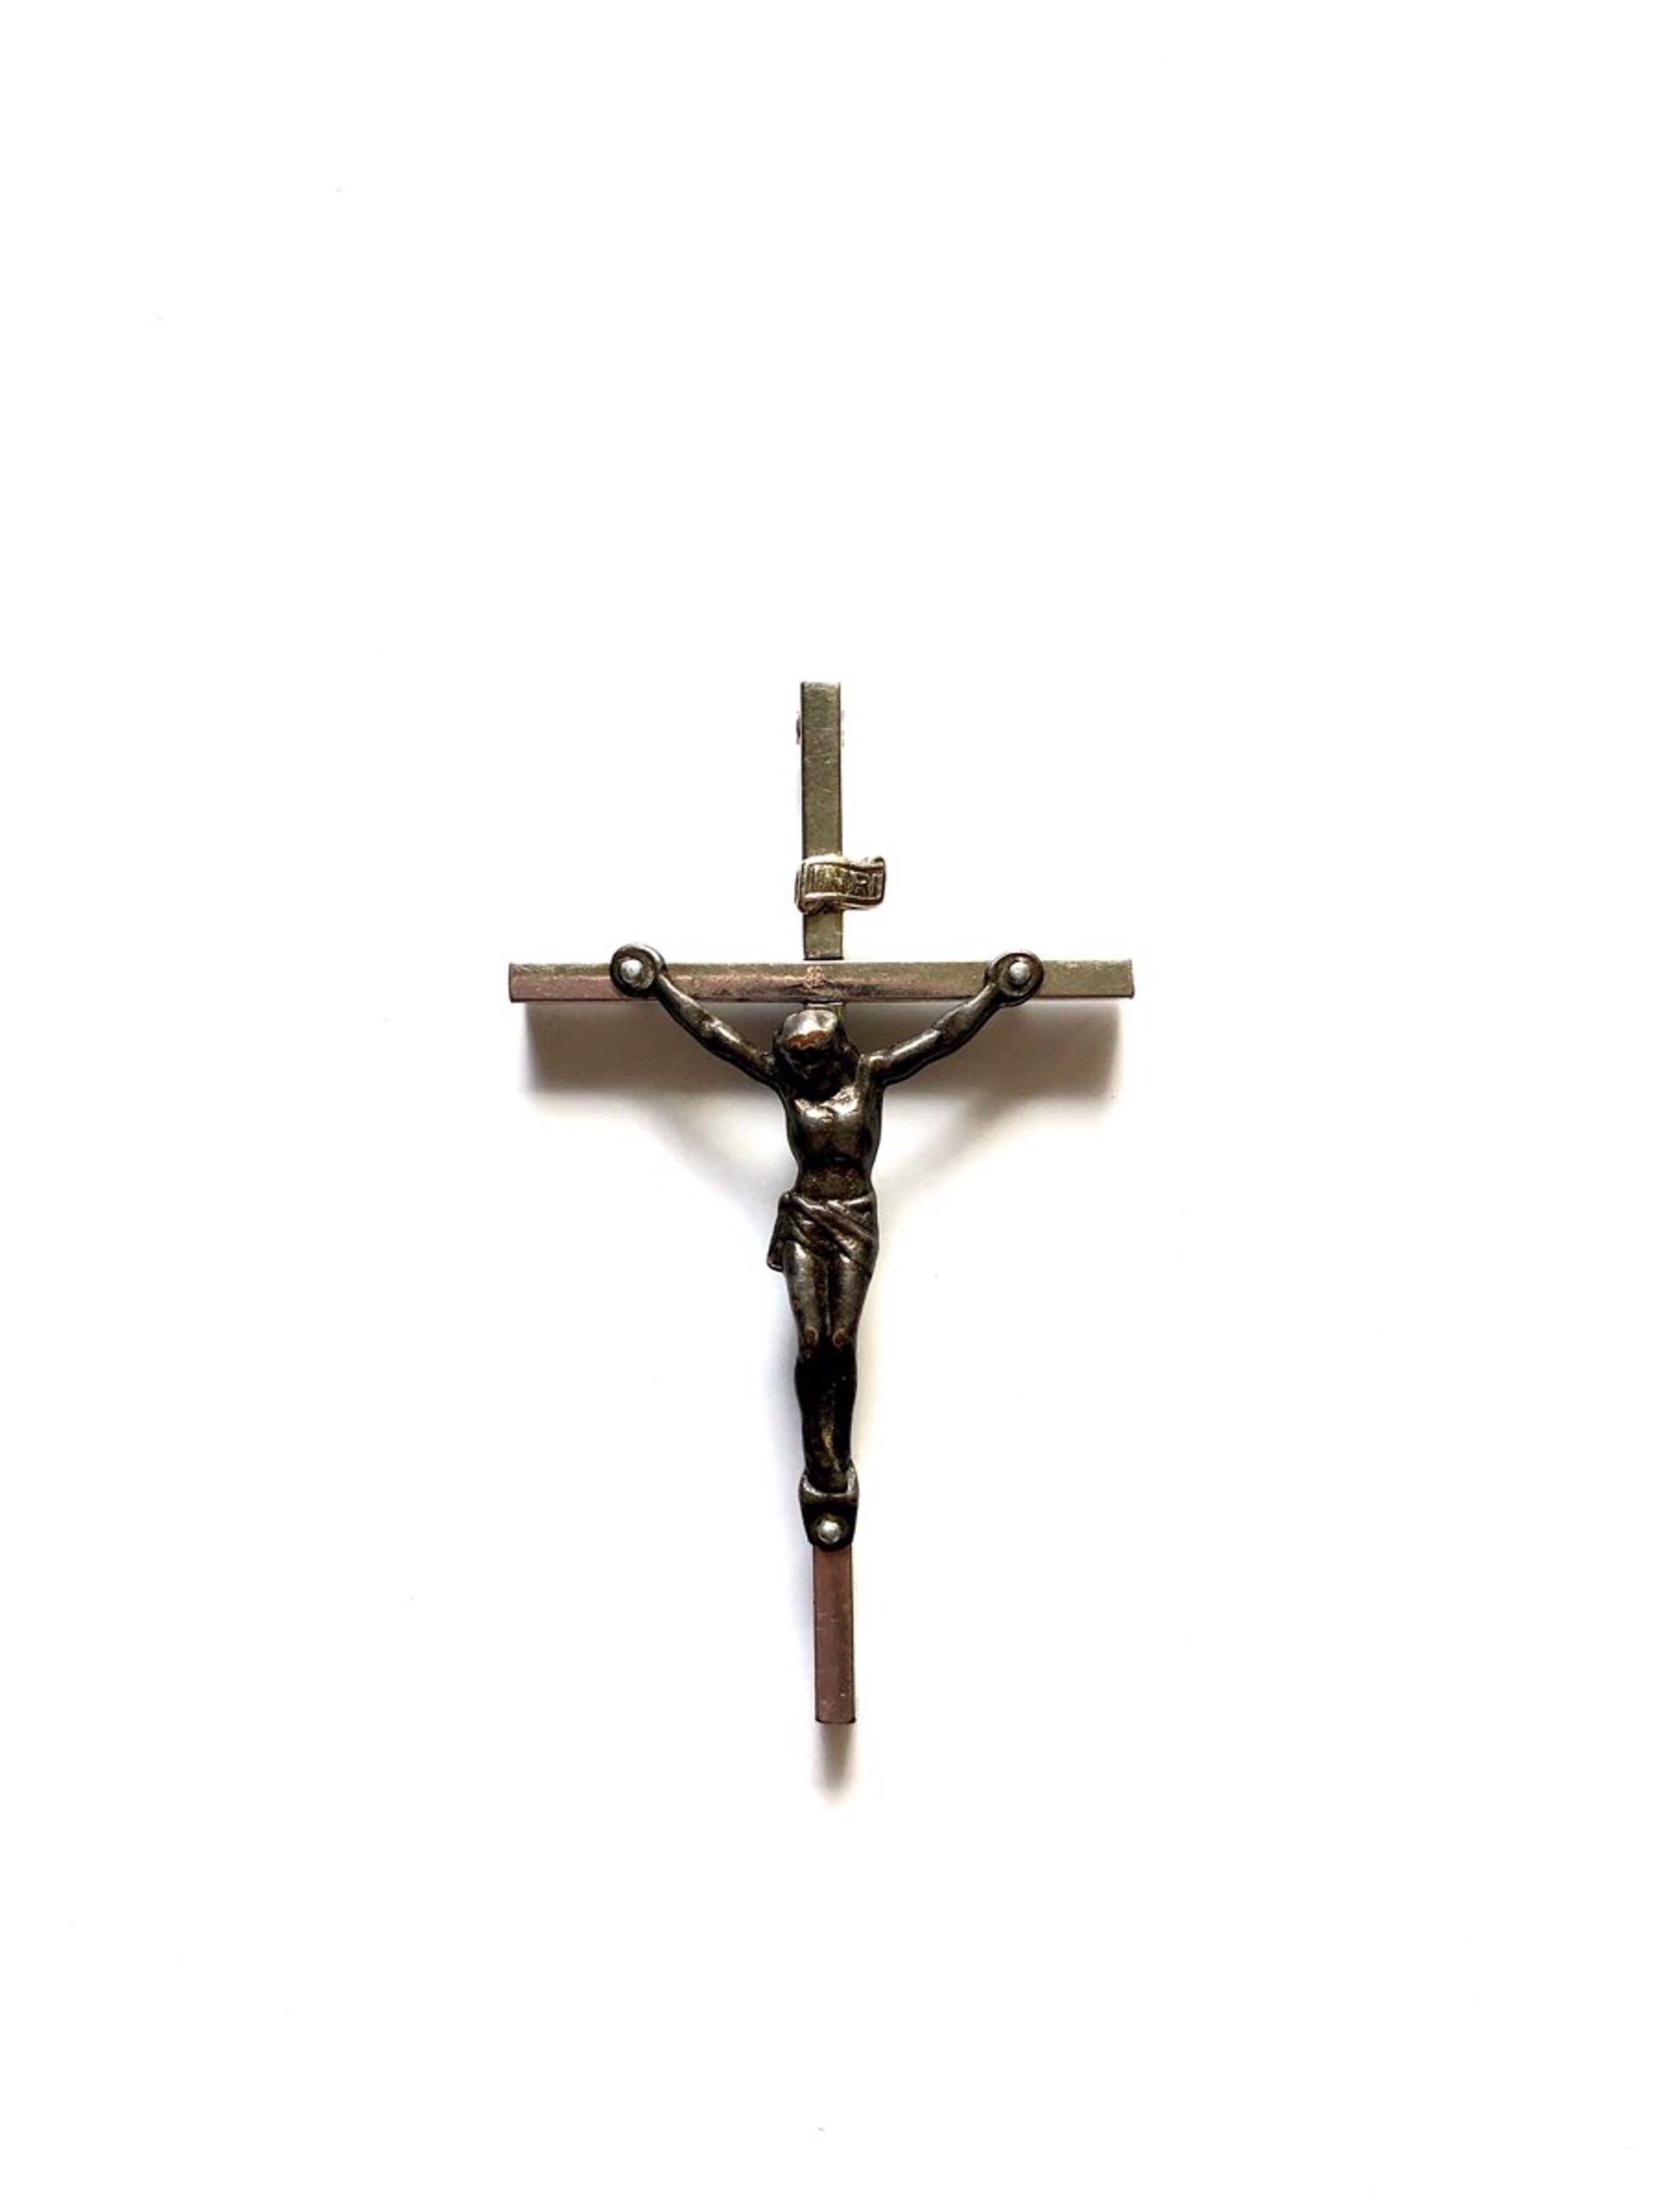 Crucifix by Jim Whipple